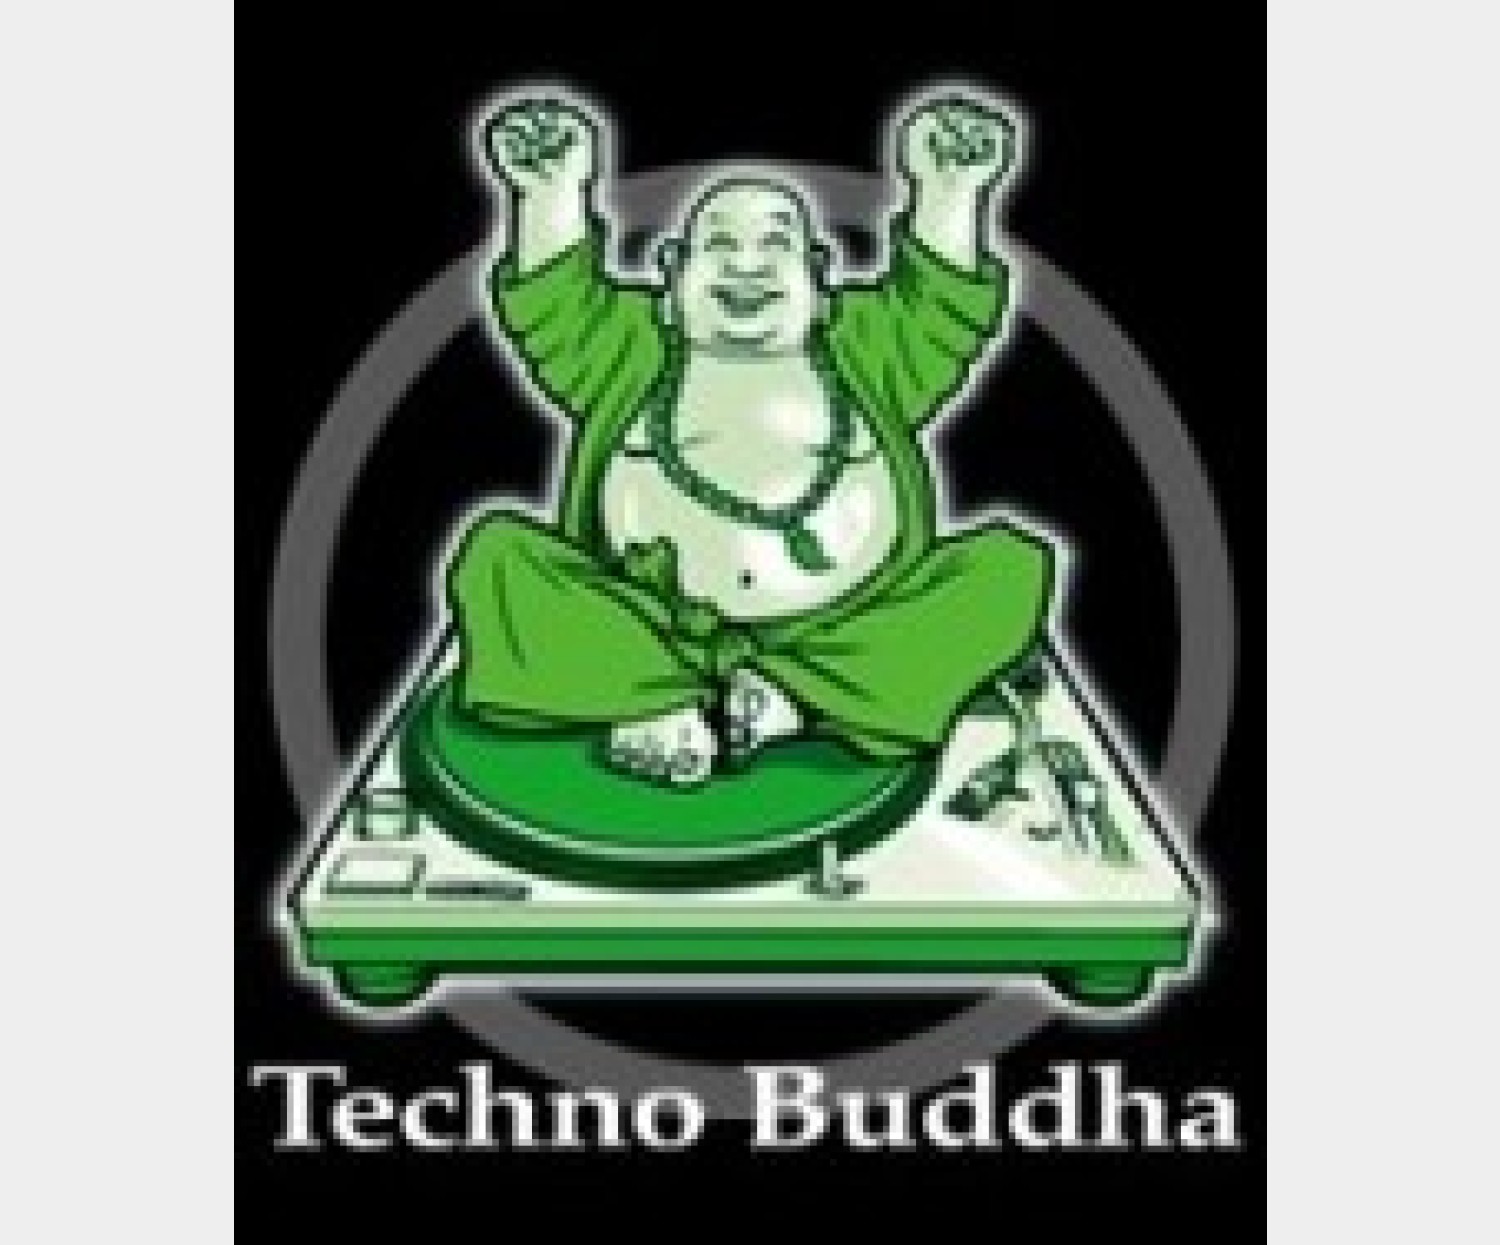 Techno Buddha